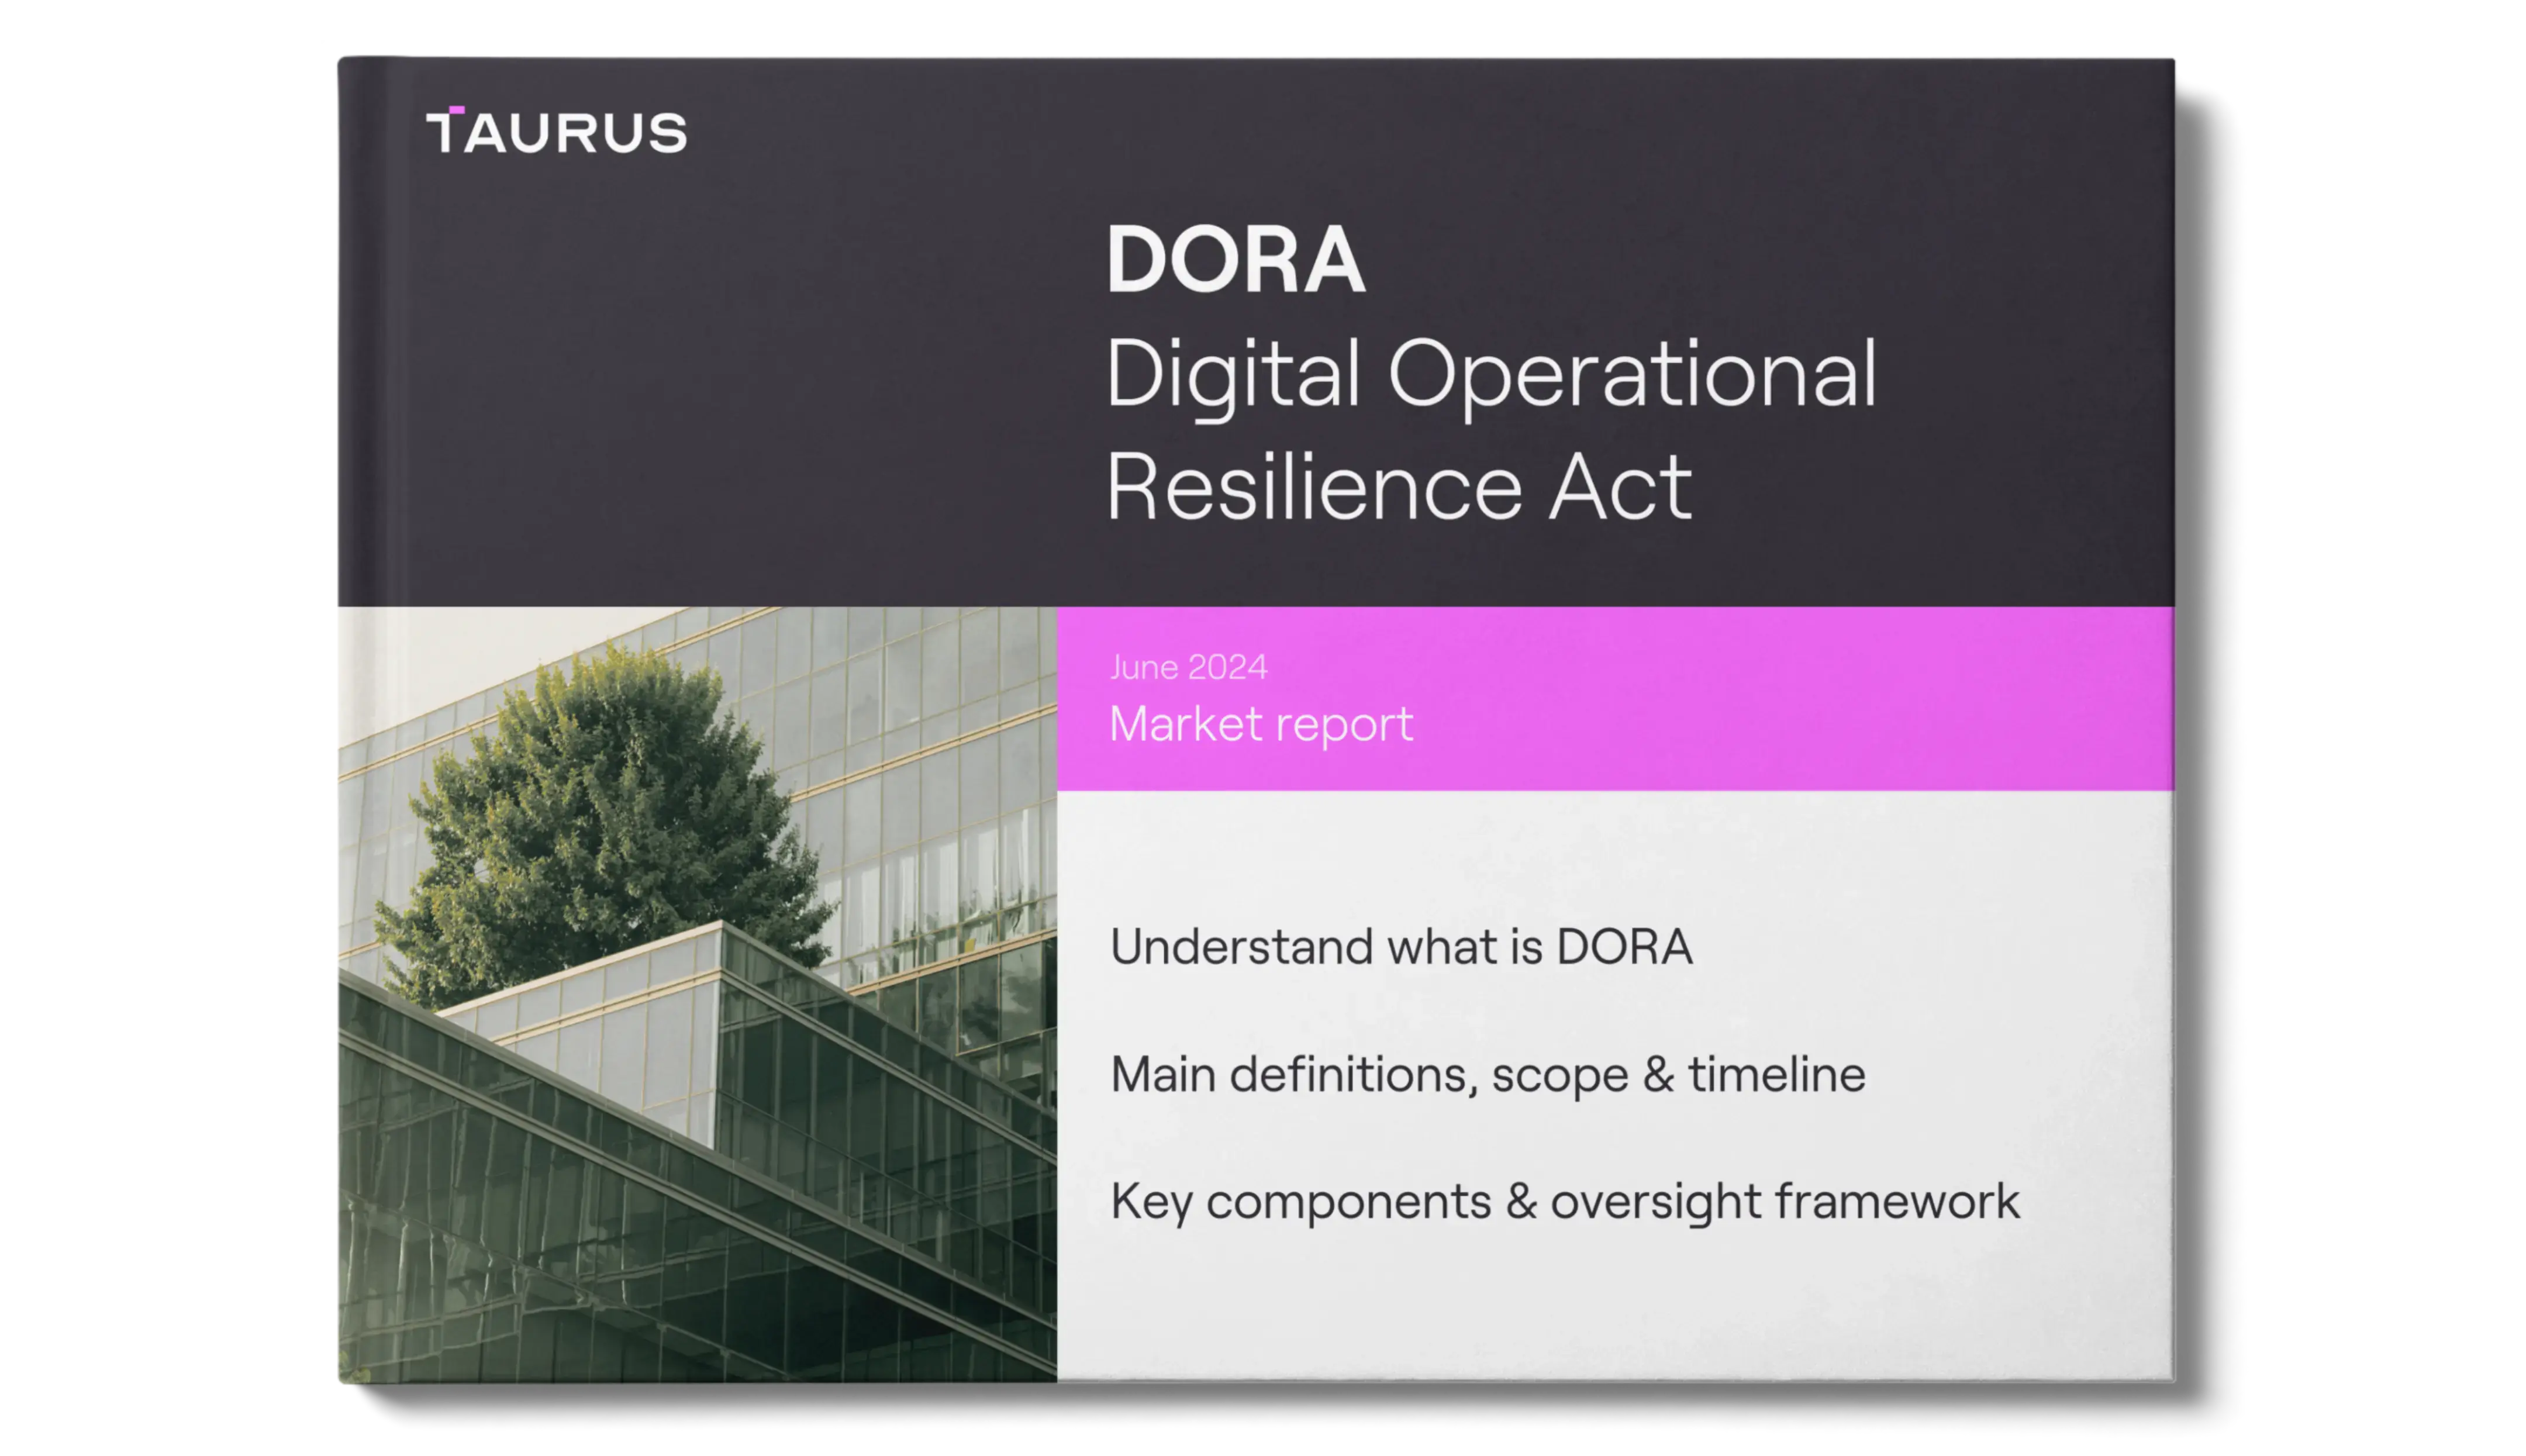 DORA: Digital Operational Resilience Act